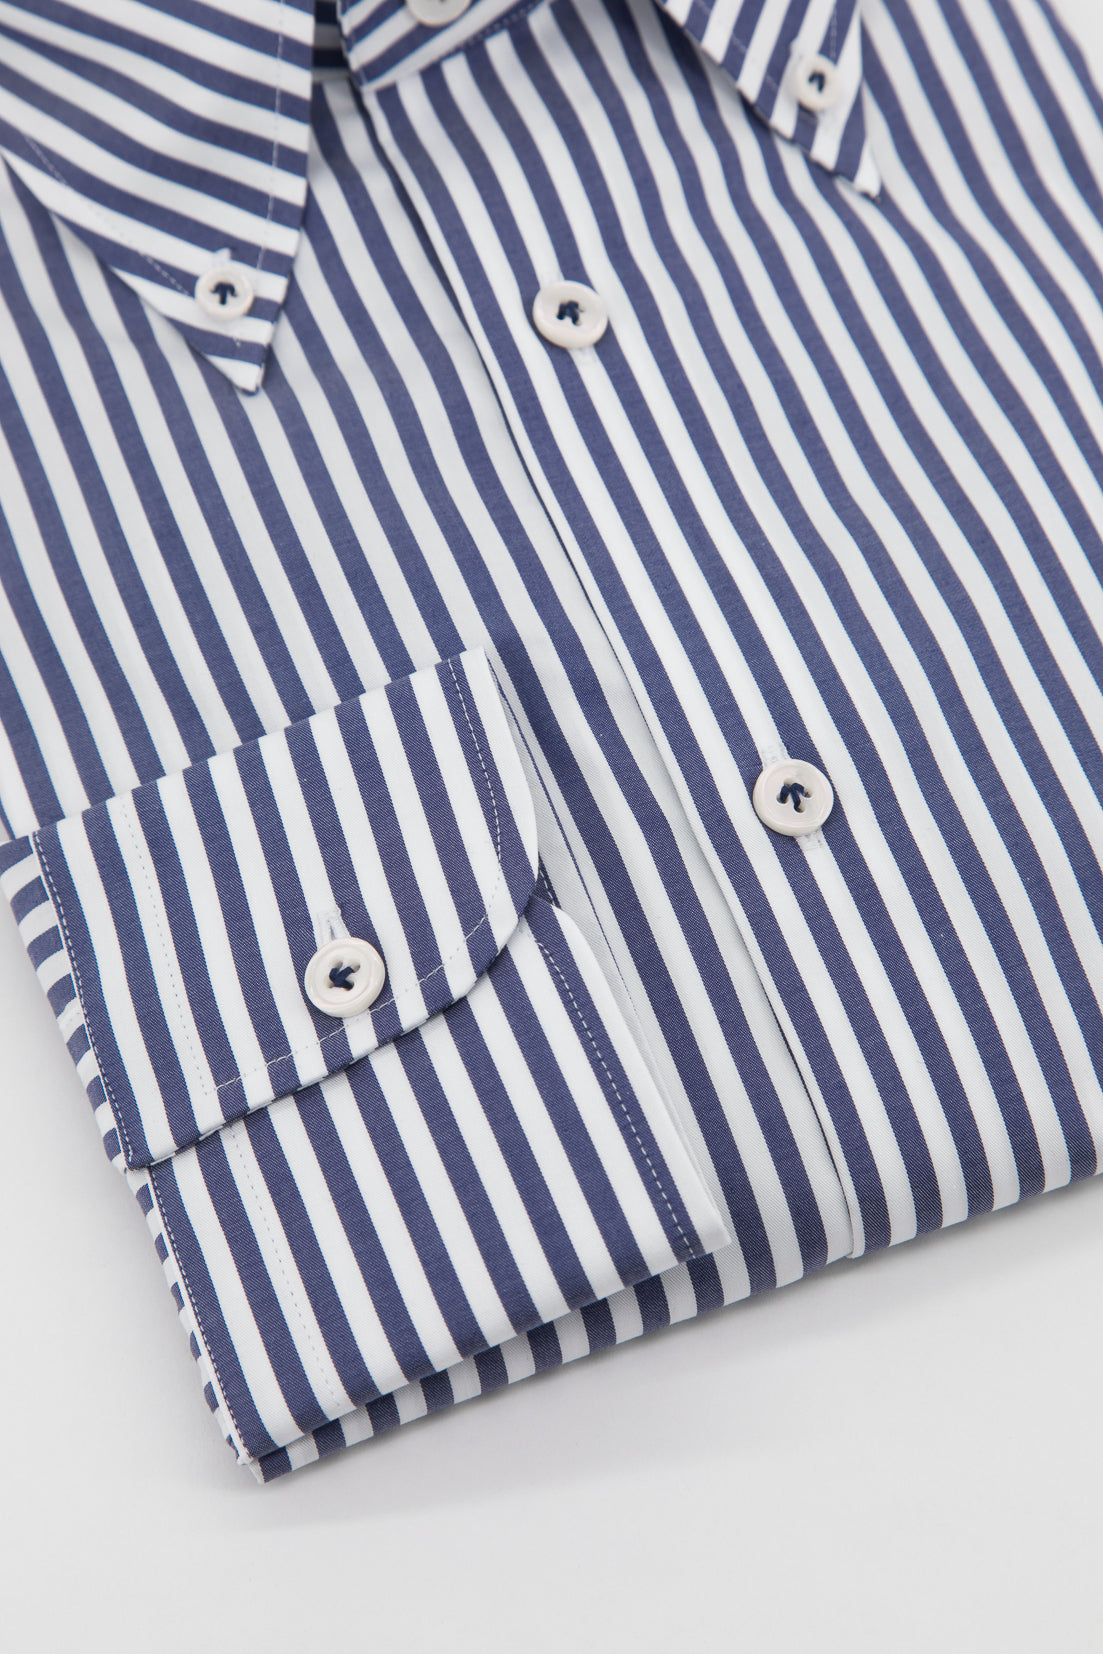 SHIRT - Large Stripes White And Blue Popeline